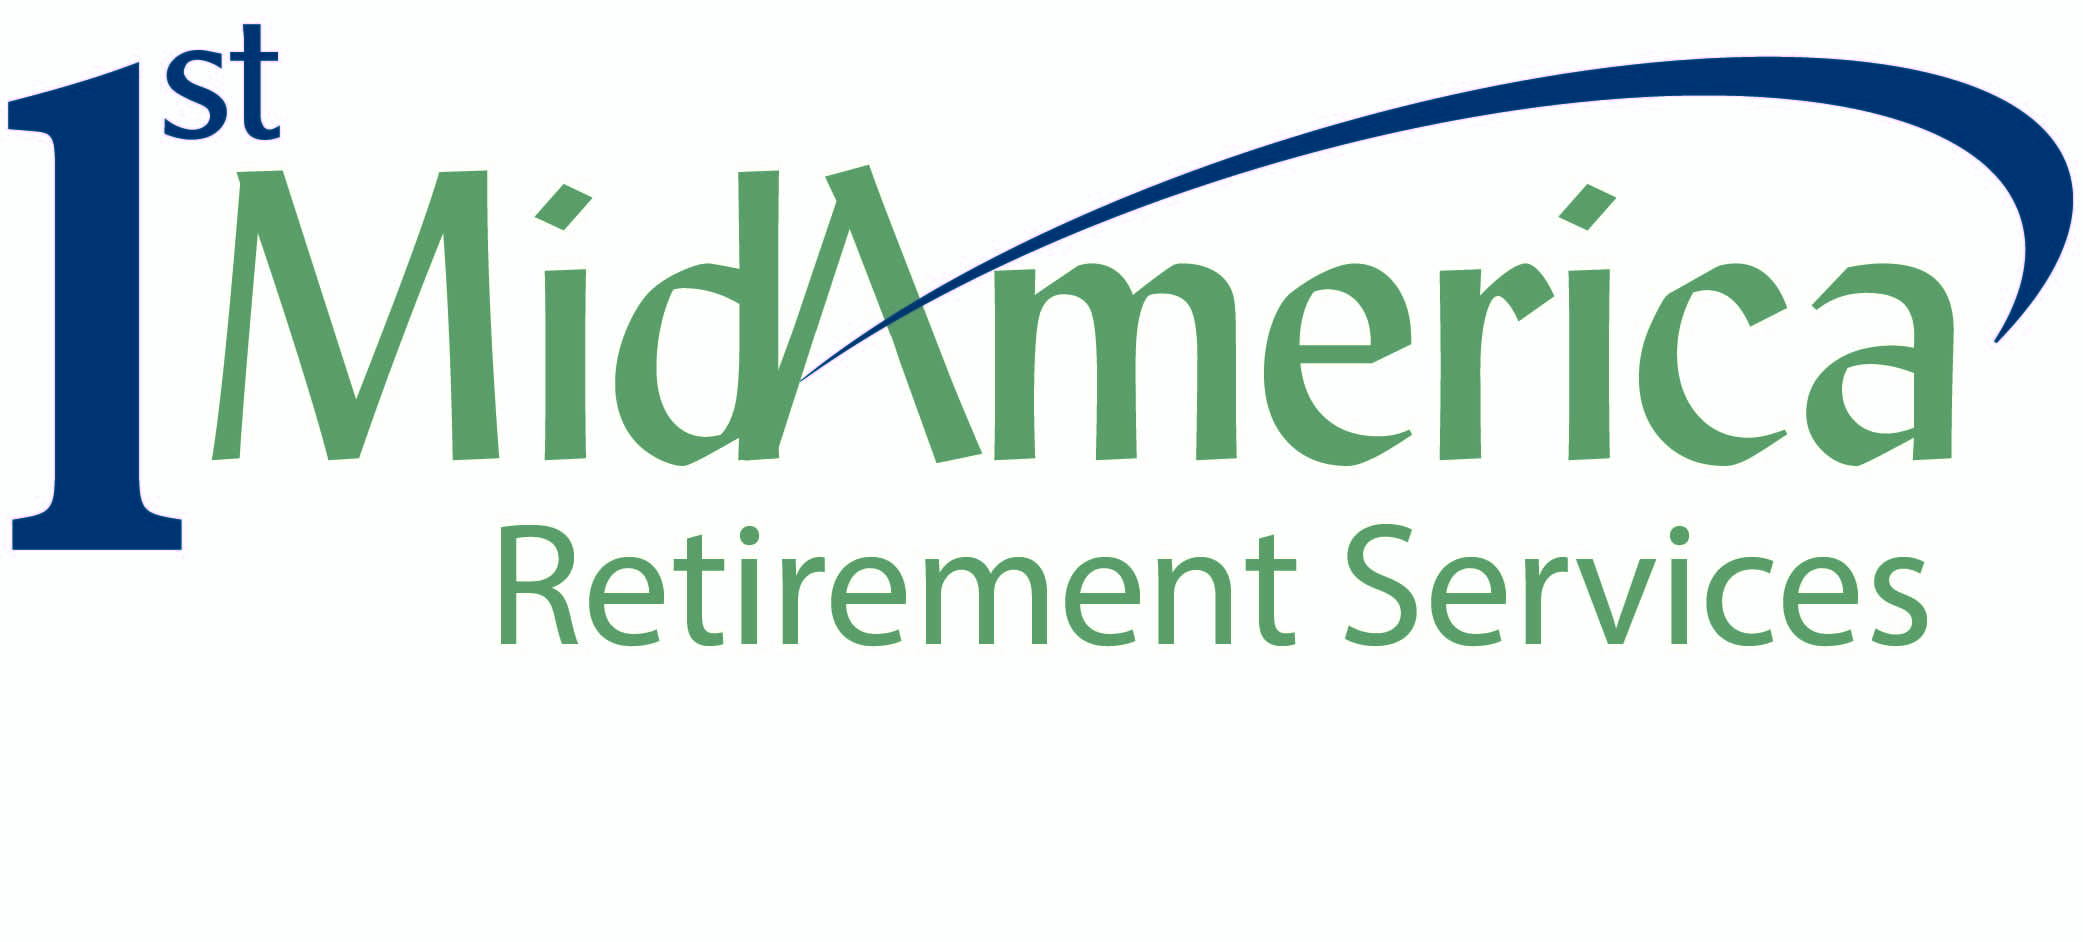 1st_MidAmerica_RetirementServices